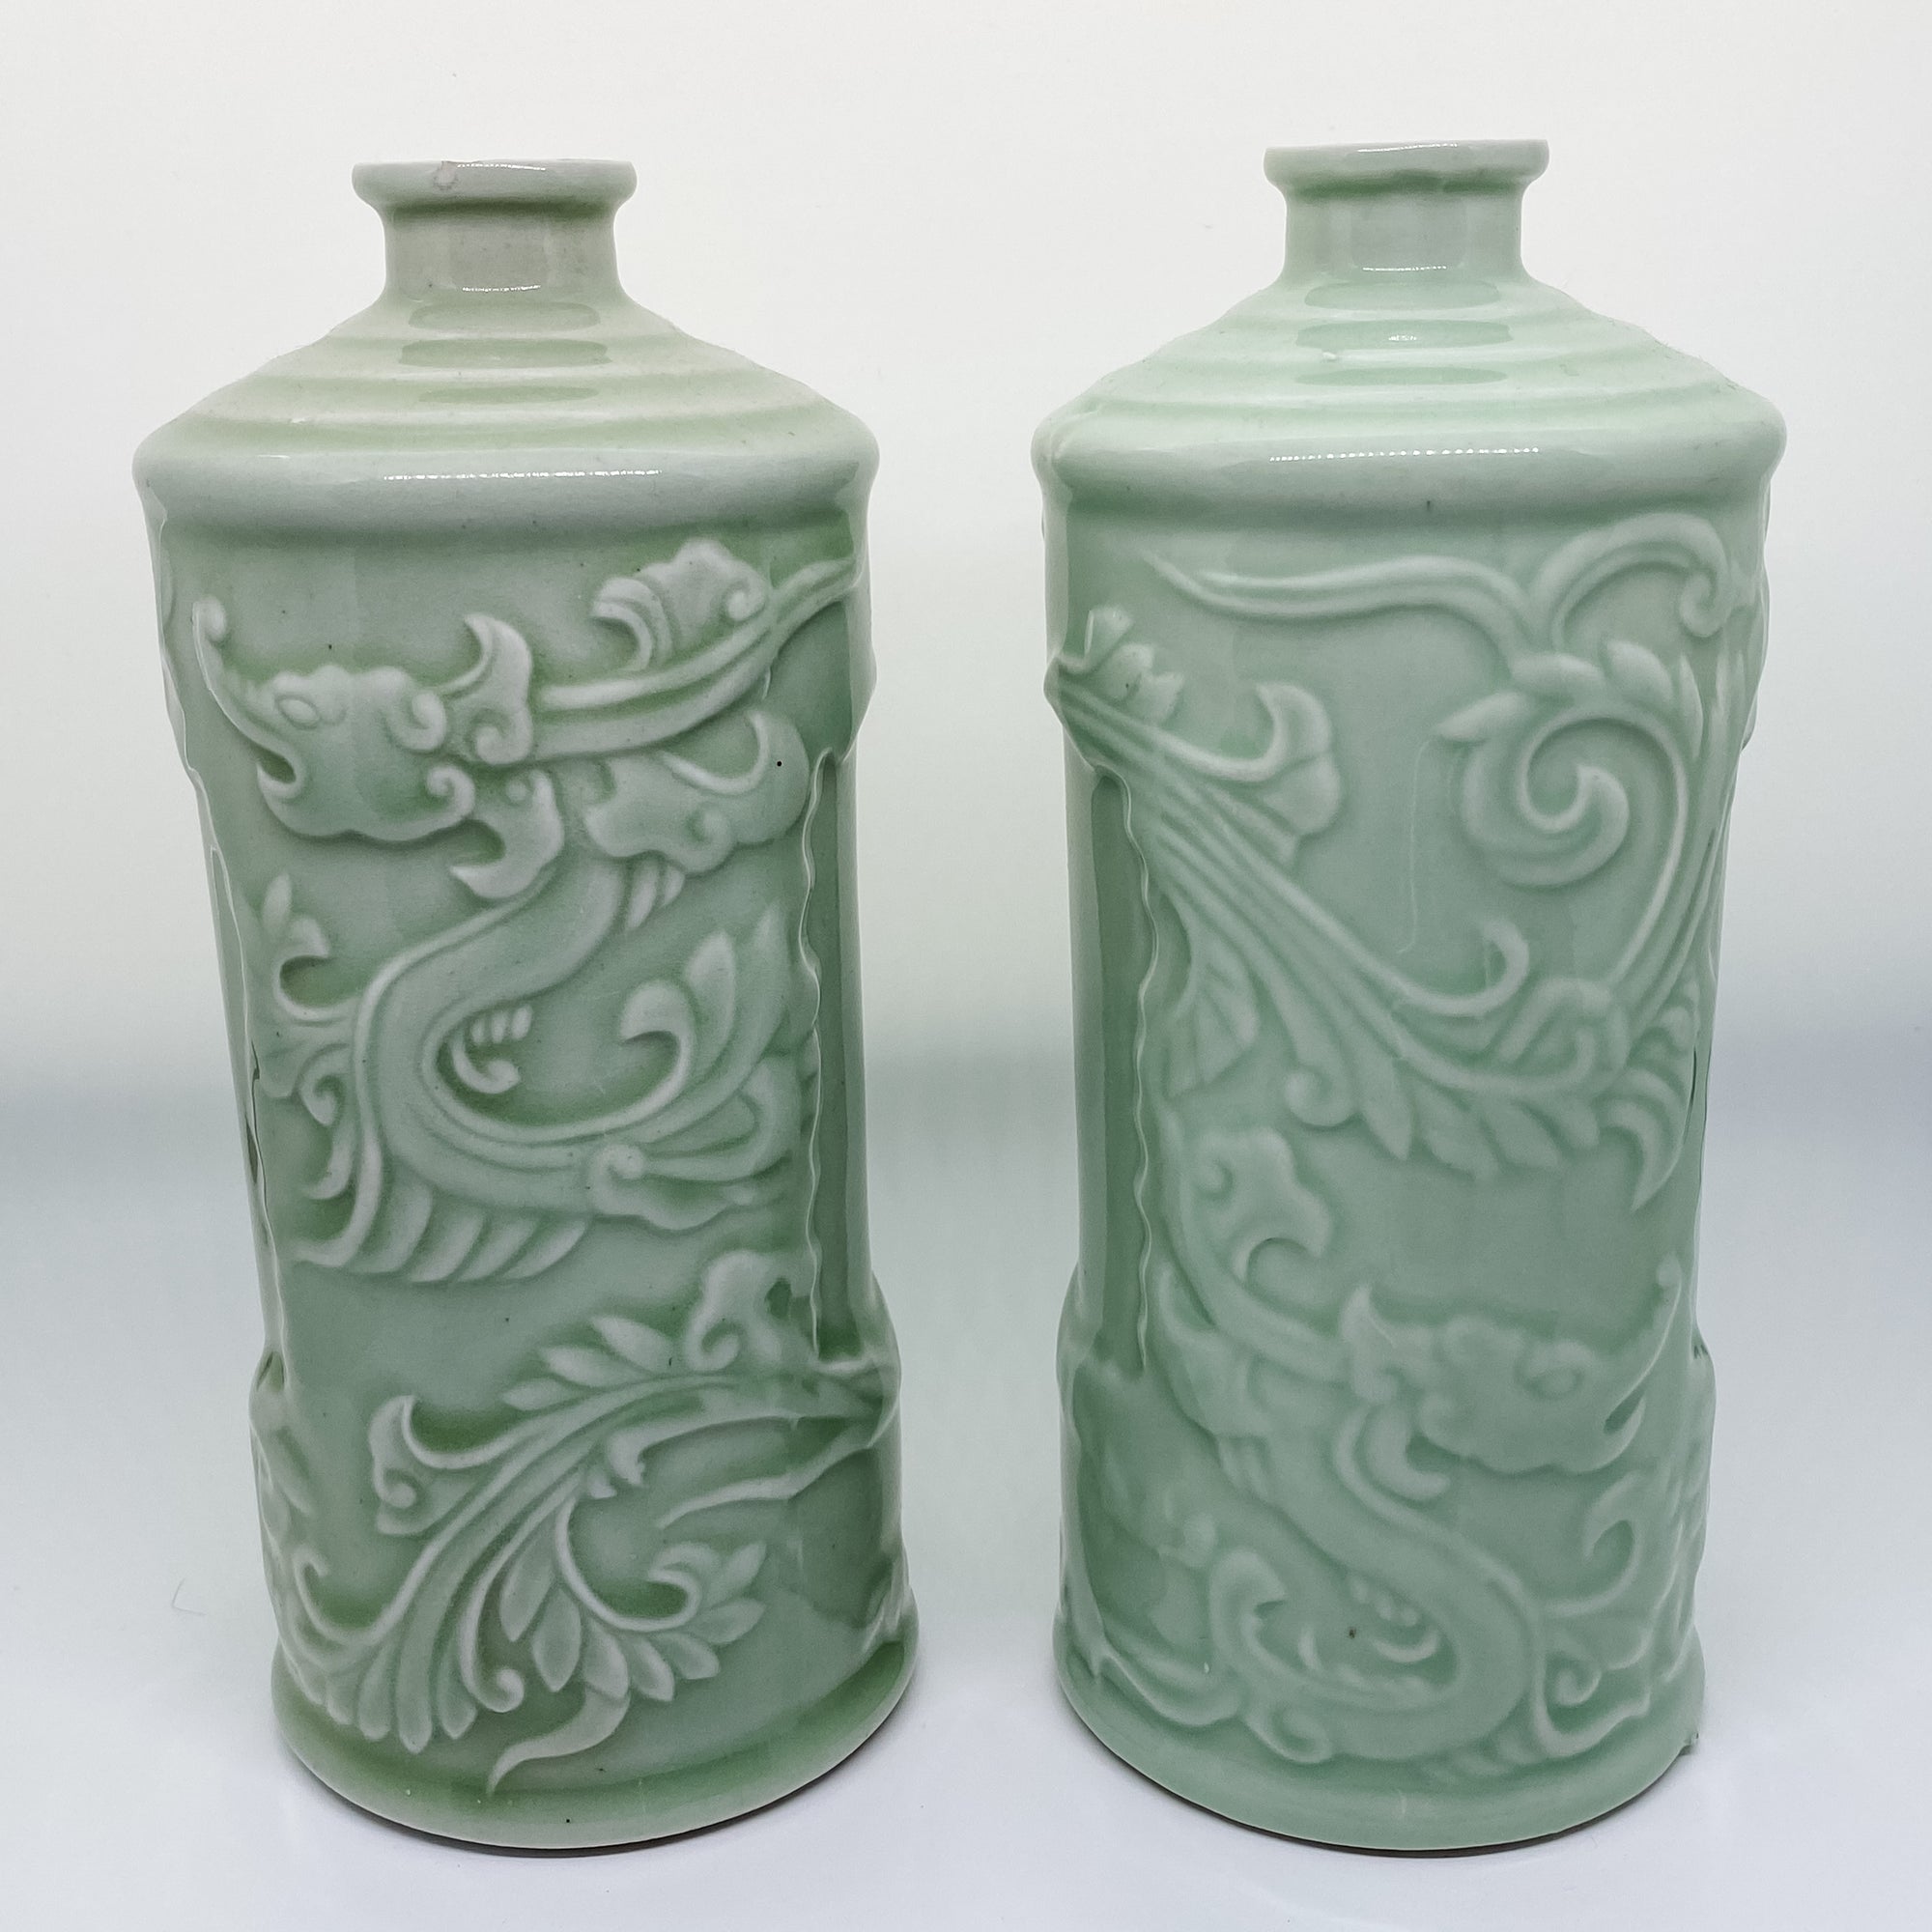 Handmade pair of Asian celadon ceramic bud vases